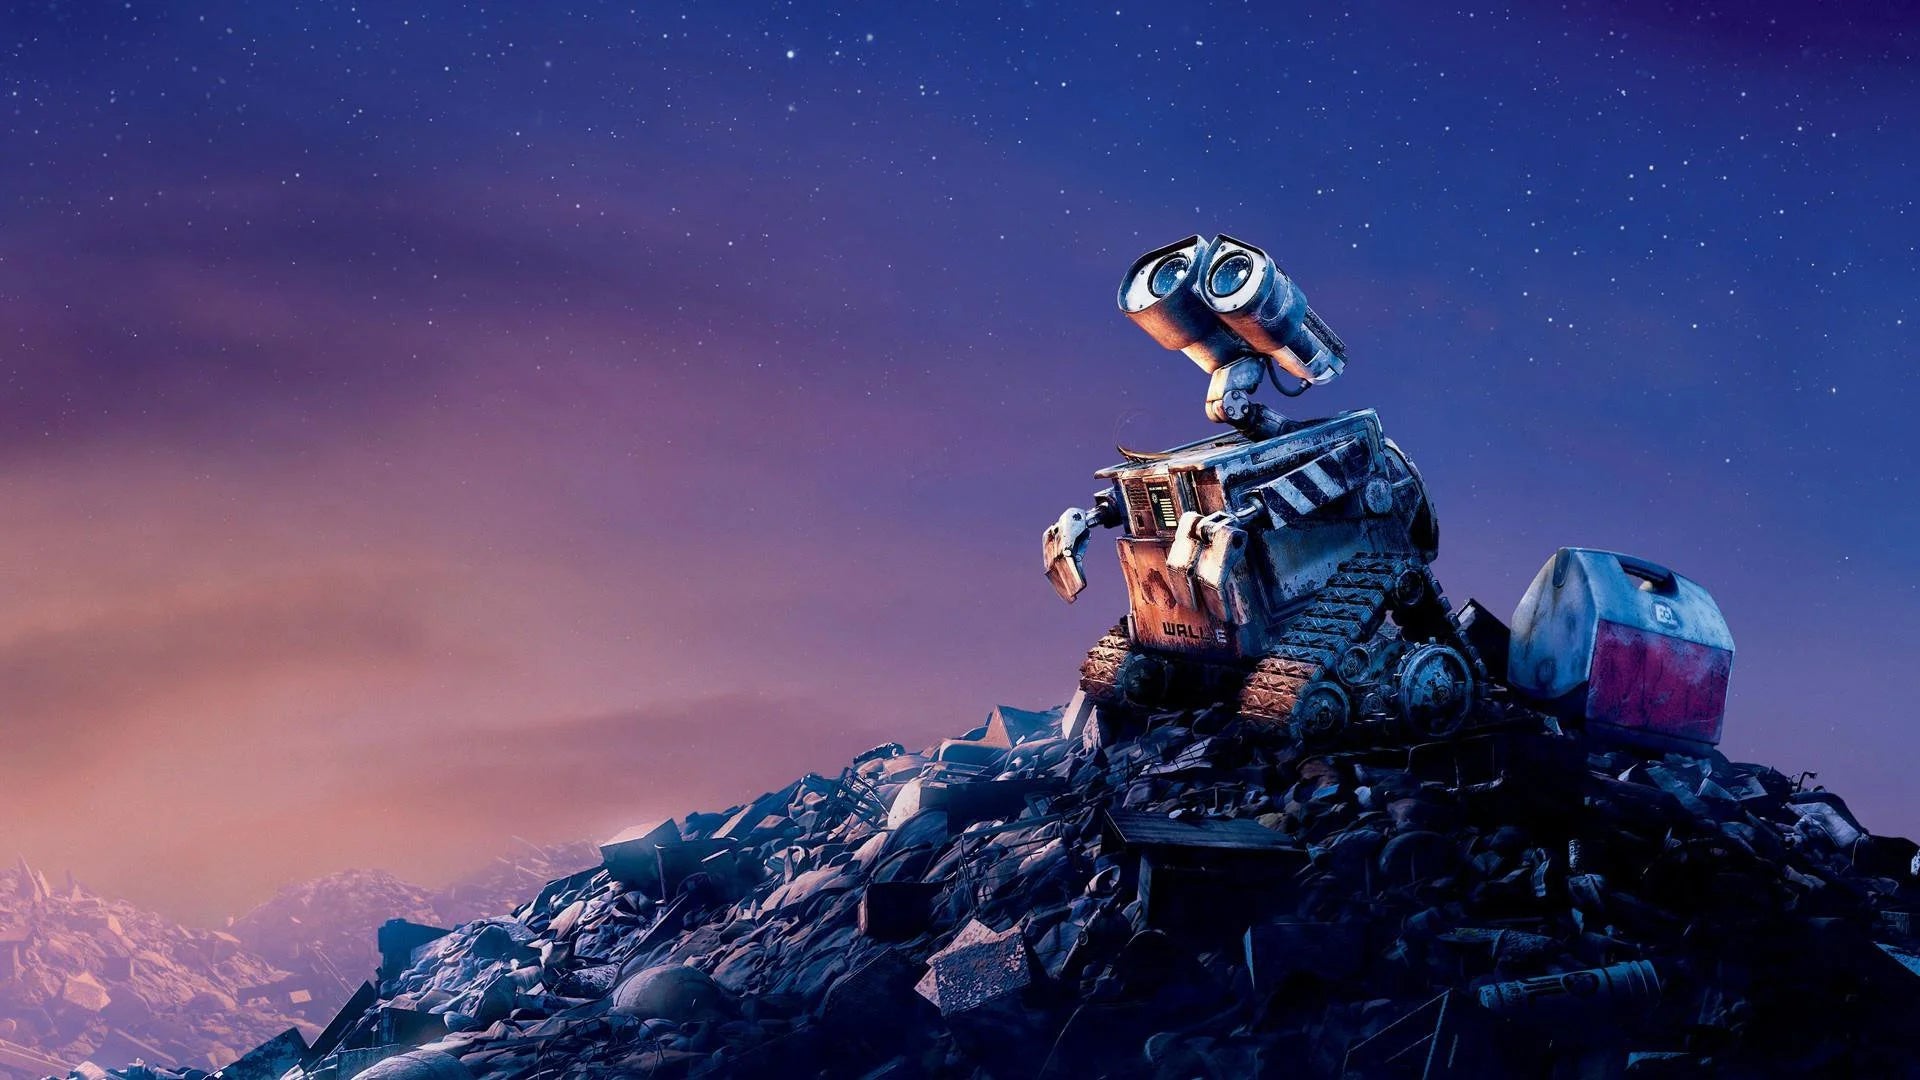 Disney Pixar's Wall-E